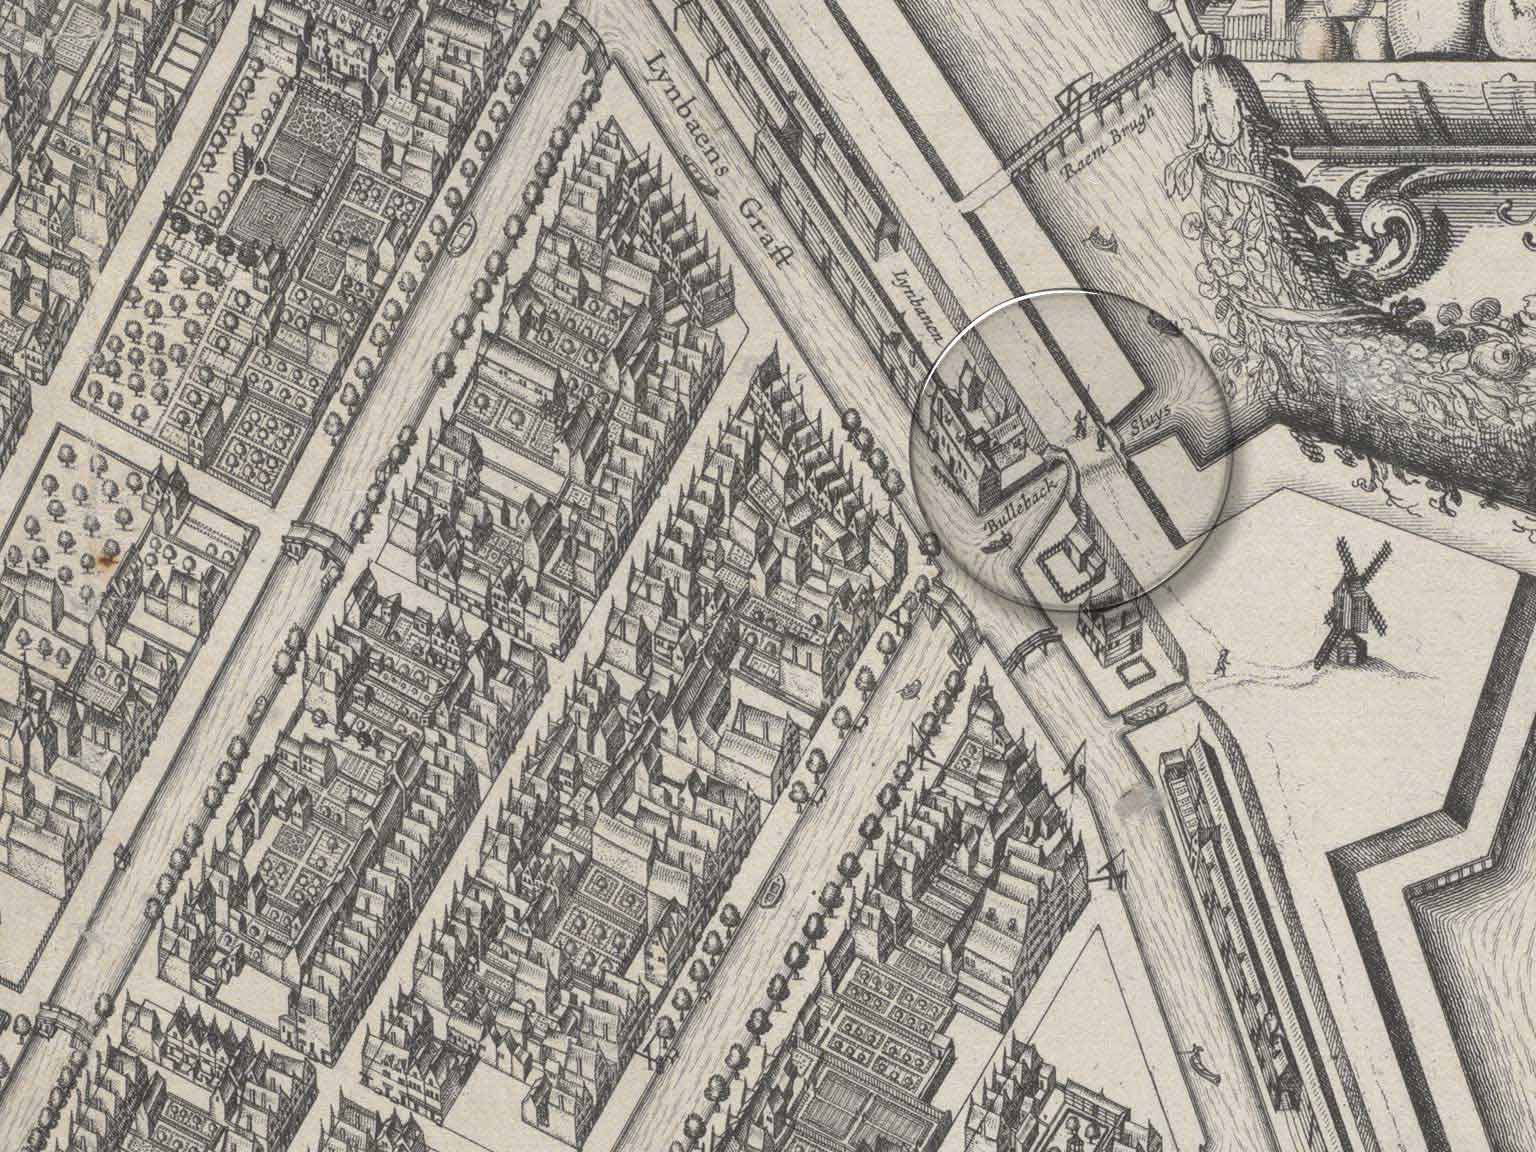 The old Bullebakssluis, Amsterdam, detail of a map from 1625 by Balthasar Florisz van Berckenrode